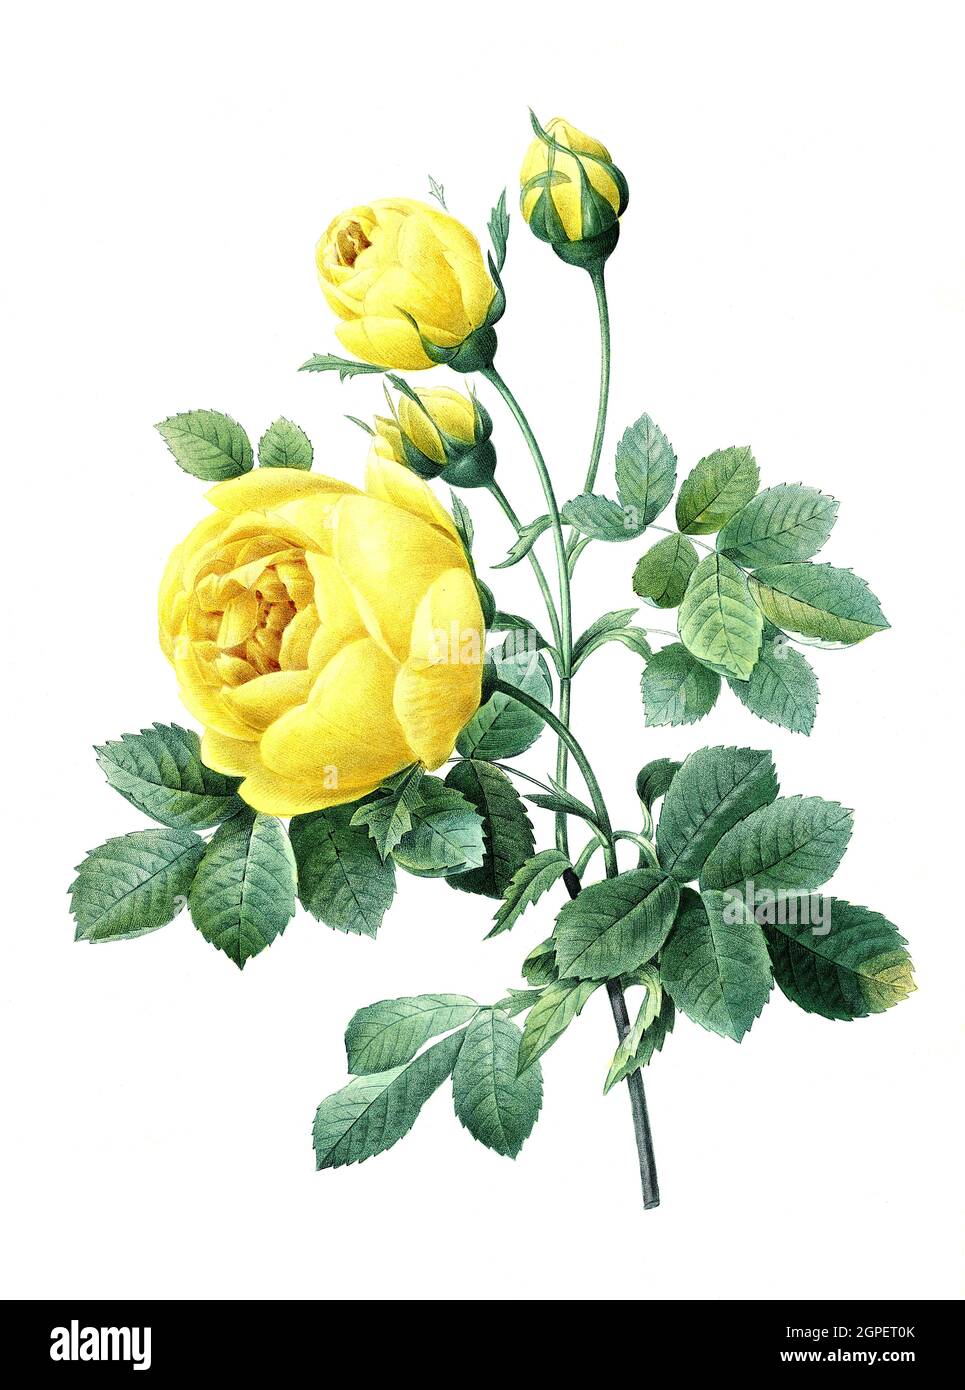 Rosa sulfurea, gelb blühende Rose / yellow blossoms of the Rose, Digital  aufbereitete Reproduktion einer Aquarellzeichnung aus dem Jahre 1827, von  P.J.Redoue, Kupfertafel / Digitally processed reproduction of a watercolor  drawing from